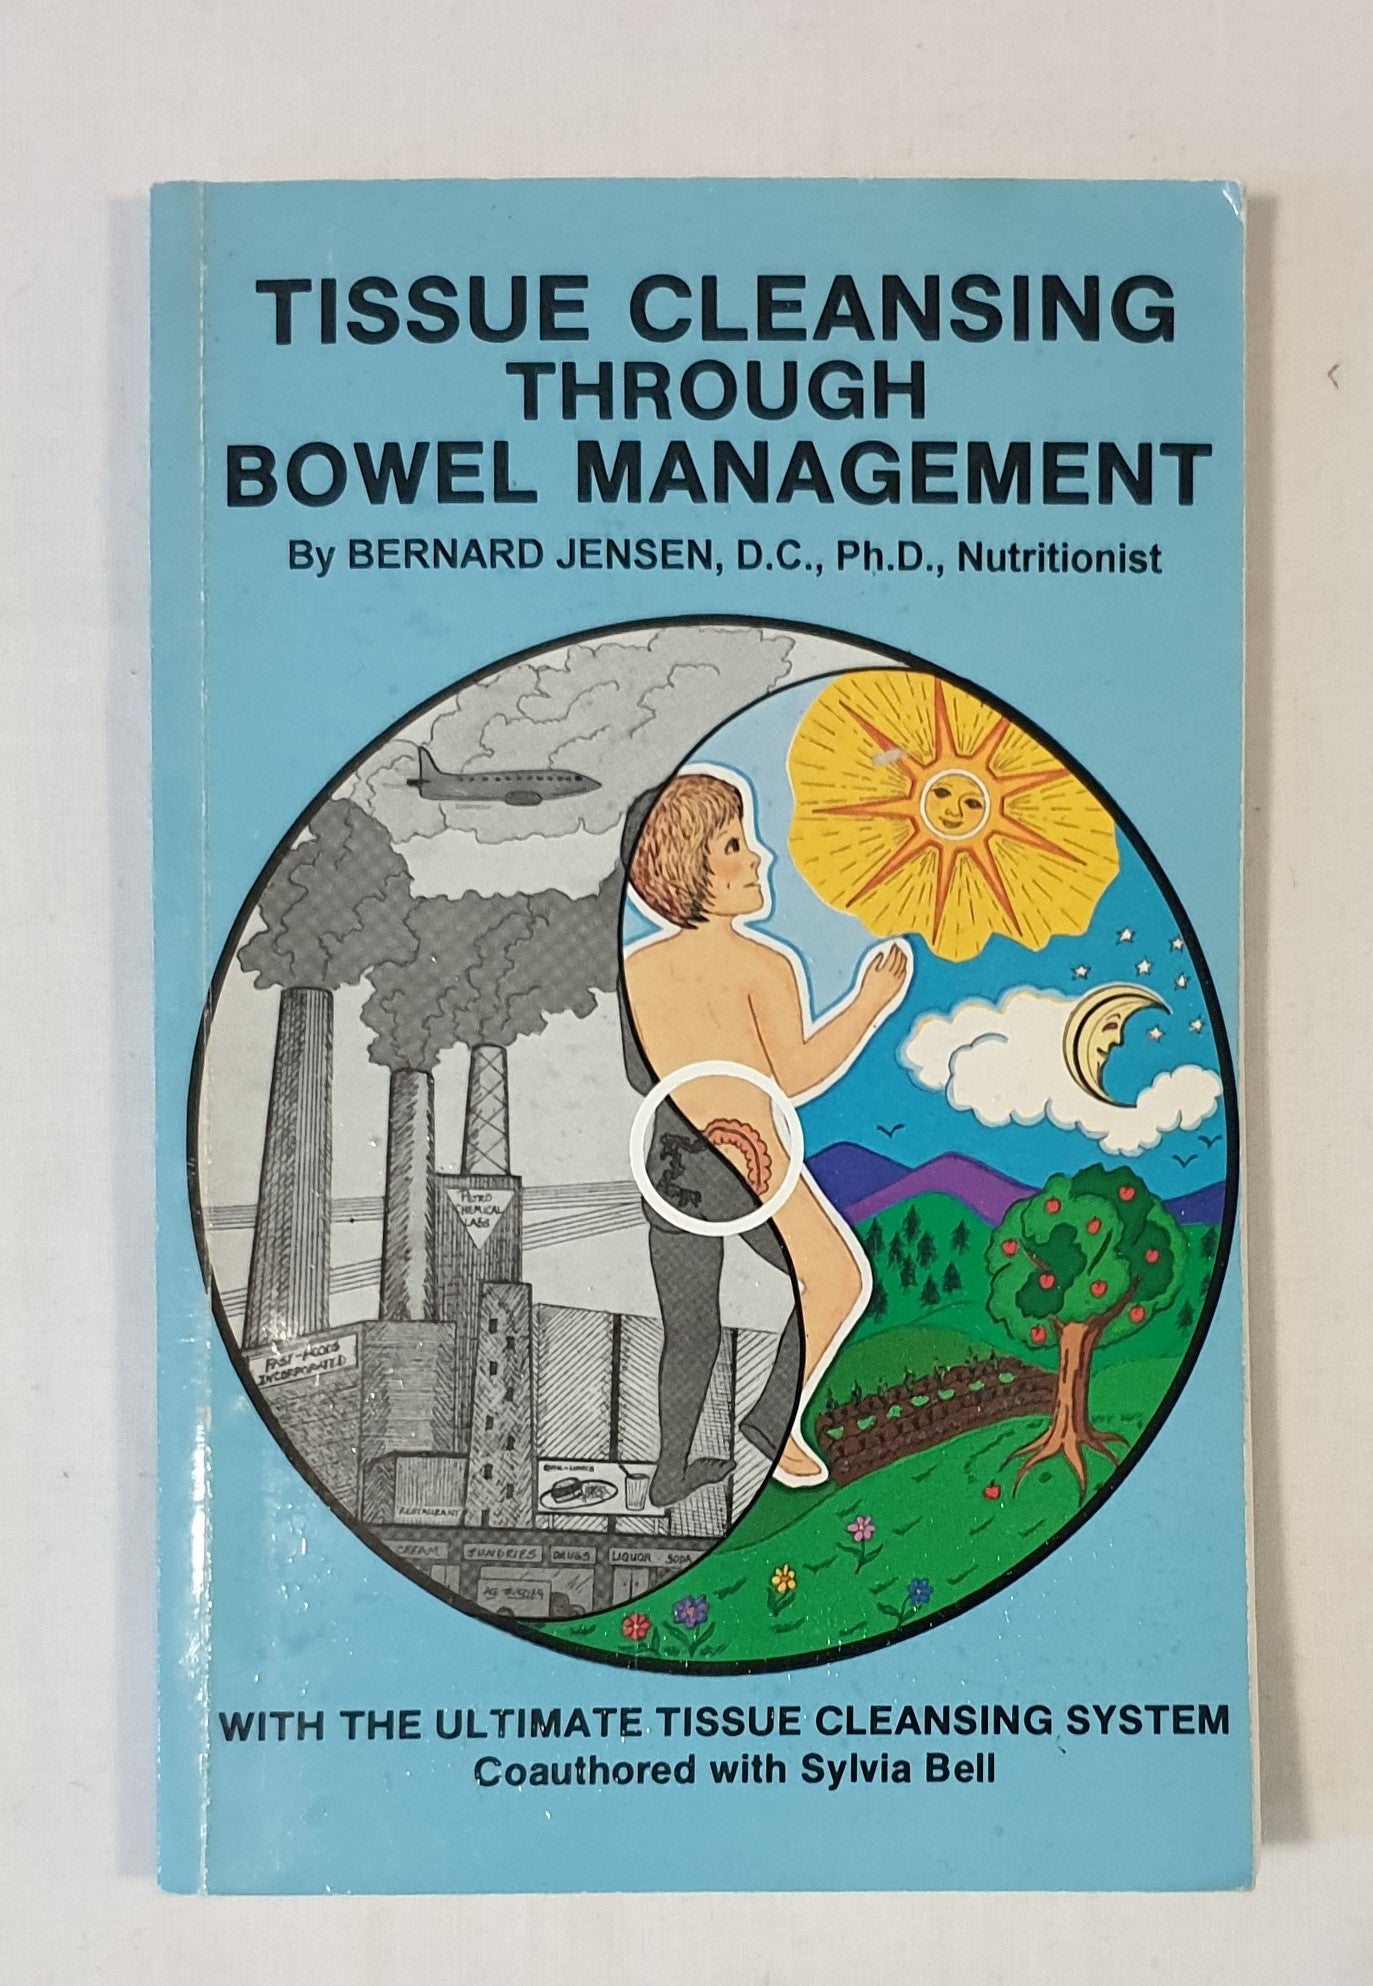 Tissue Cleansing Through Bowel Management by Bernard Jensen